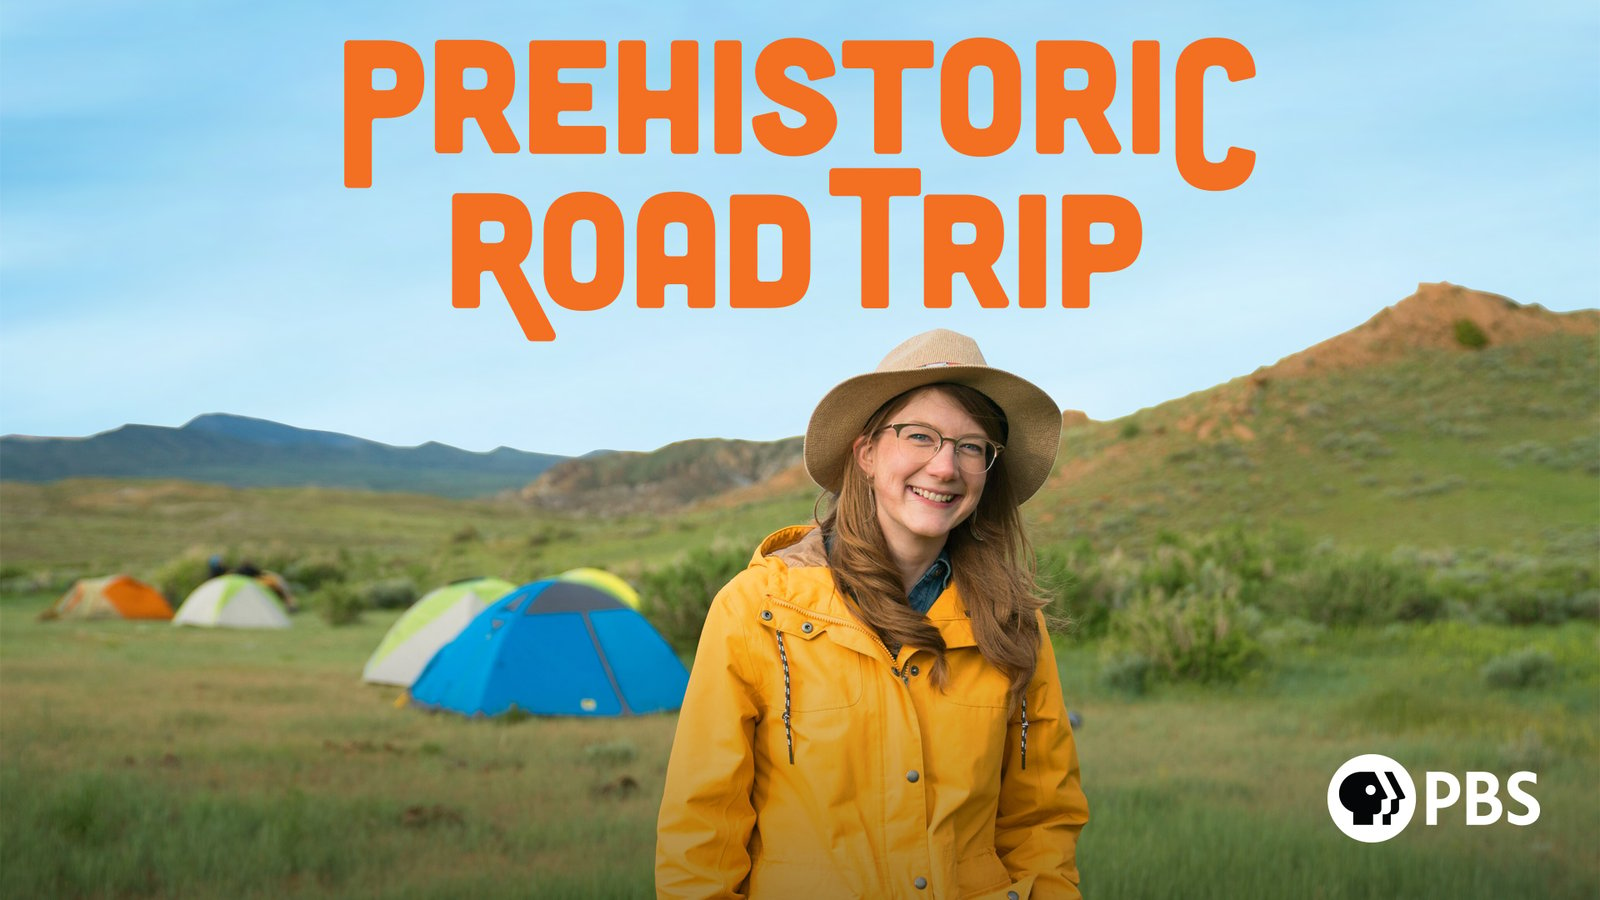 Prehistoric Road Trip